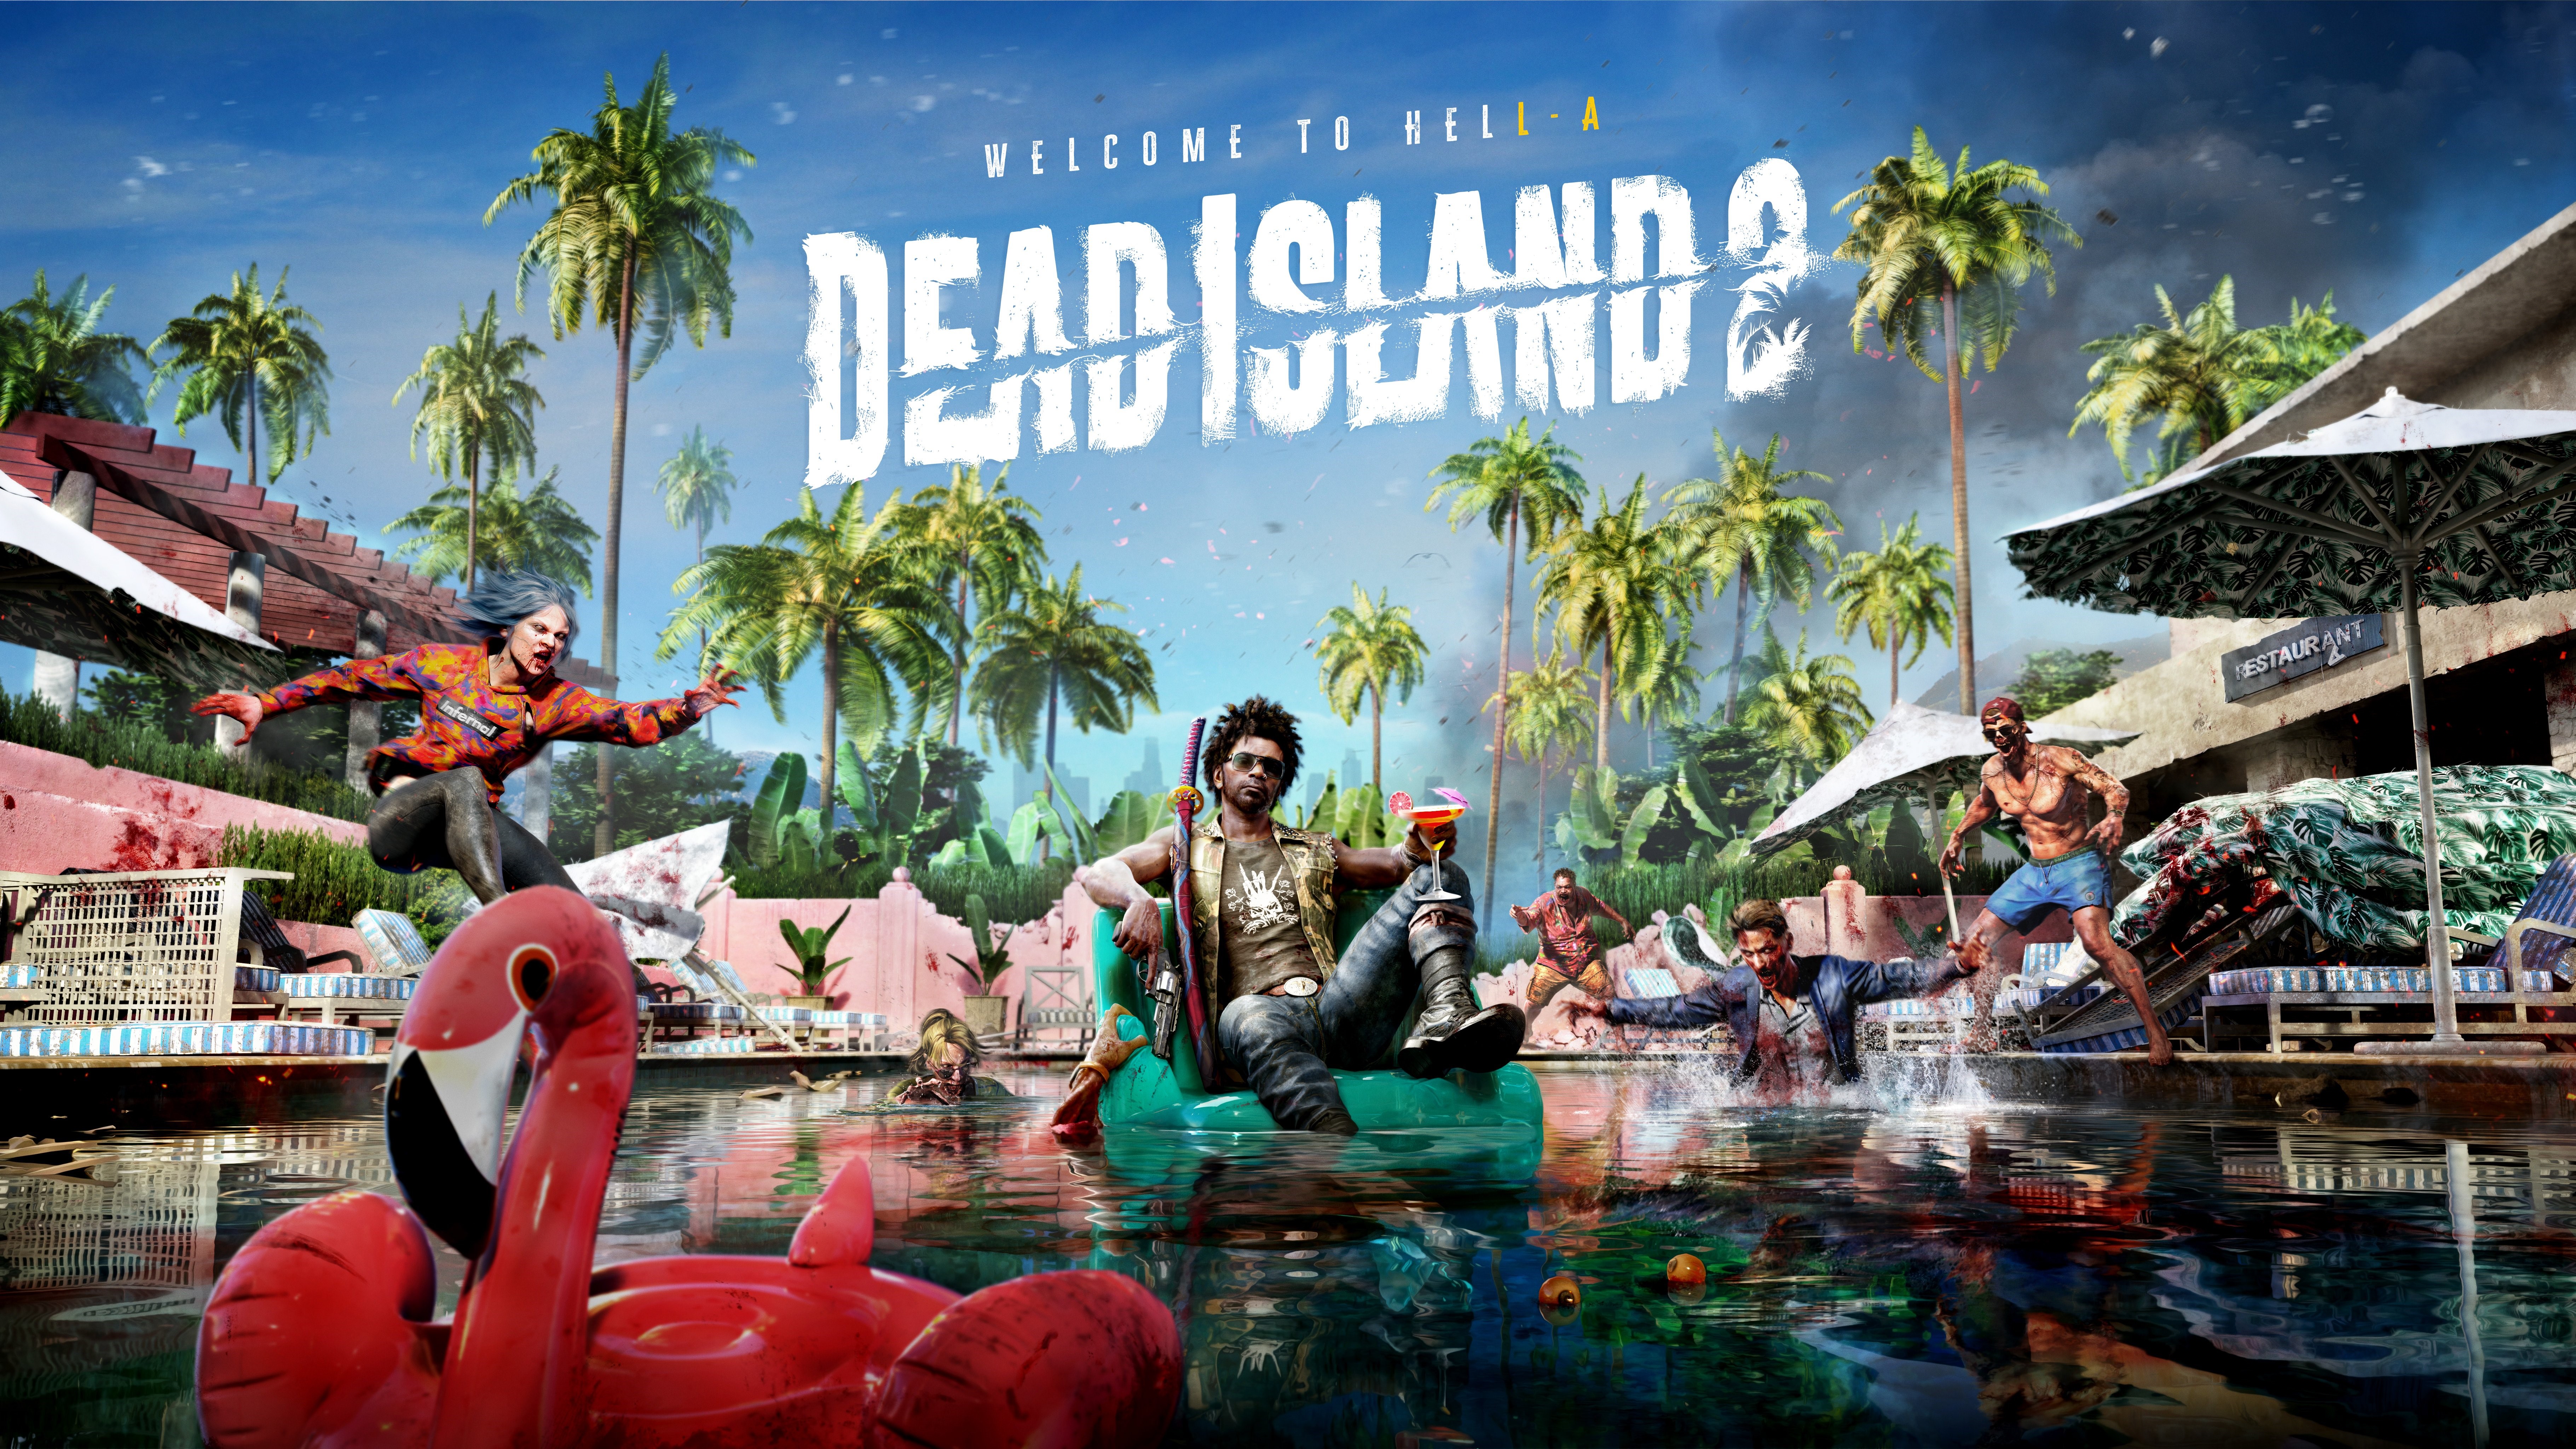 Dead island начало